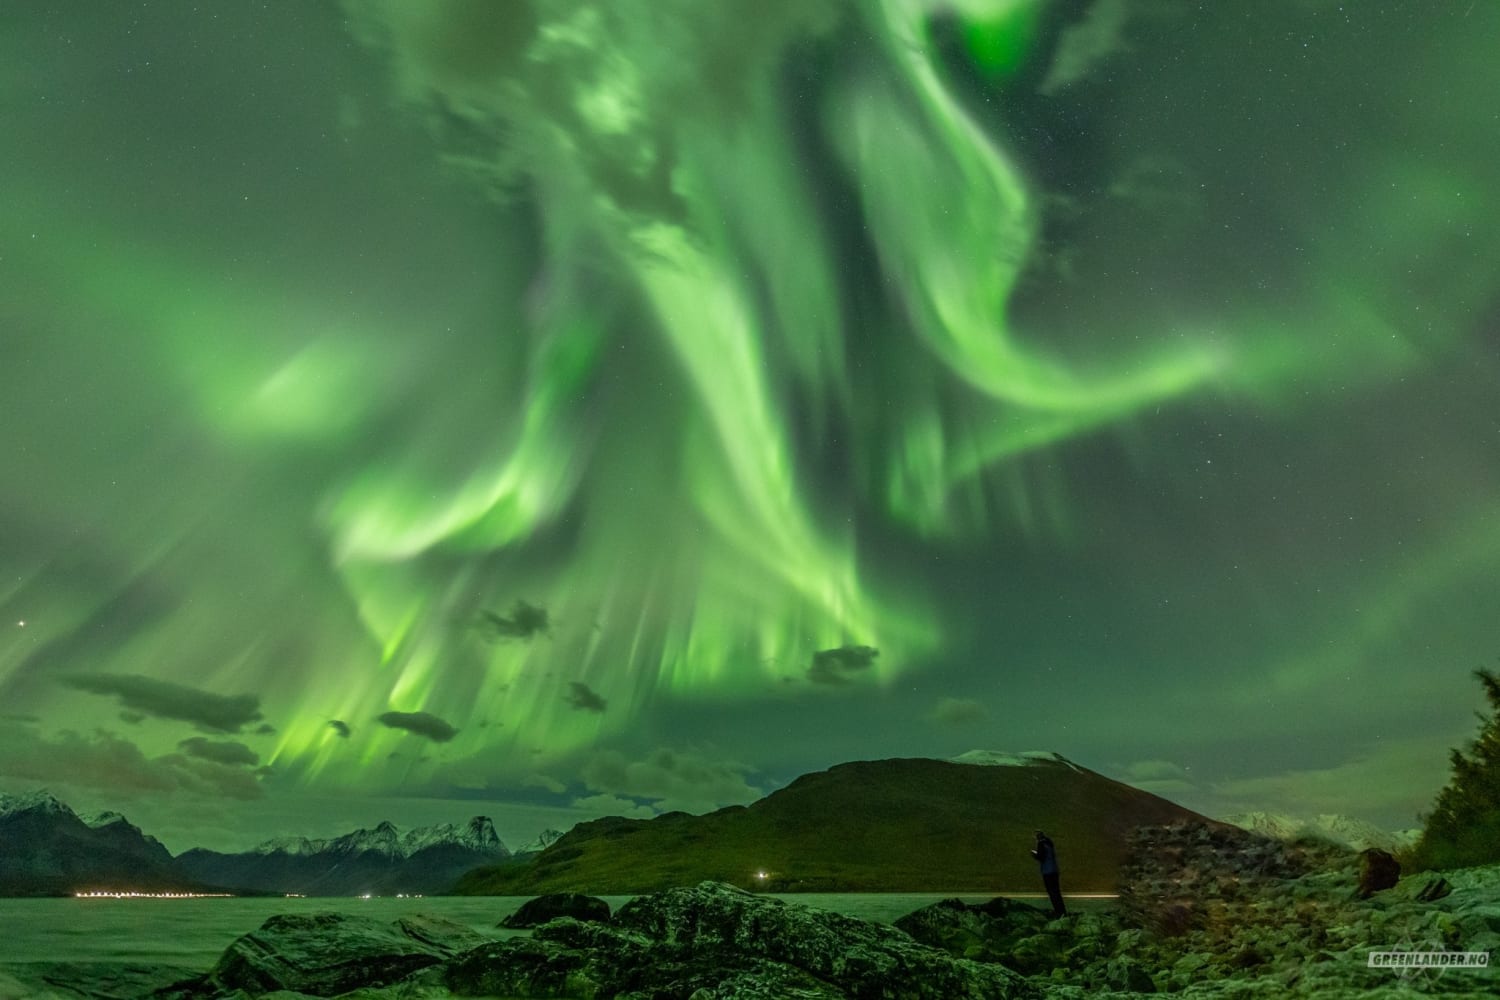 Aurora Borealis over Kingdom of Norway photographed by Markus Varik on 23 September 2020.